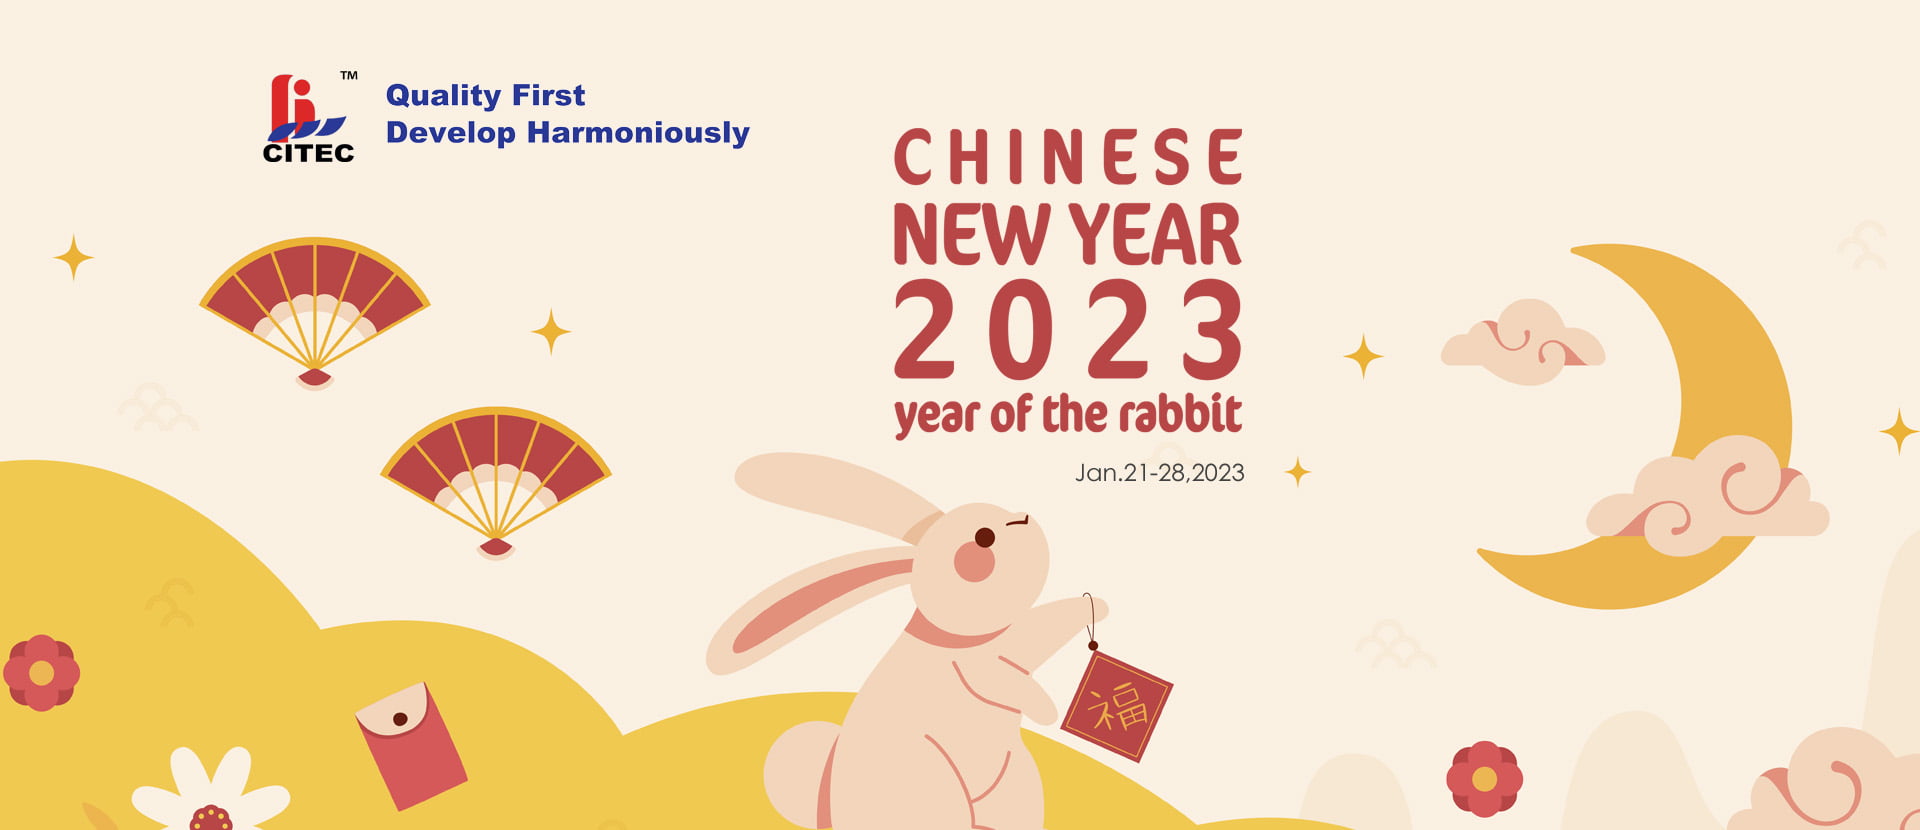 Happy Chinese New year